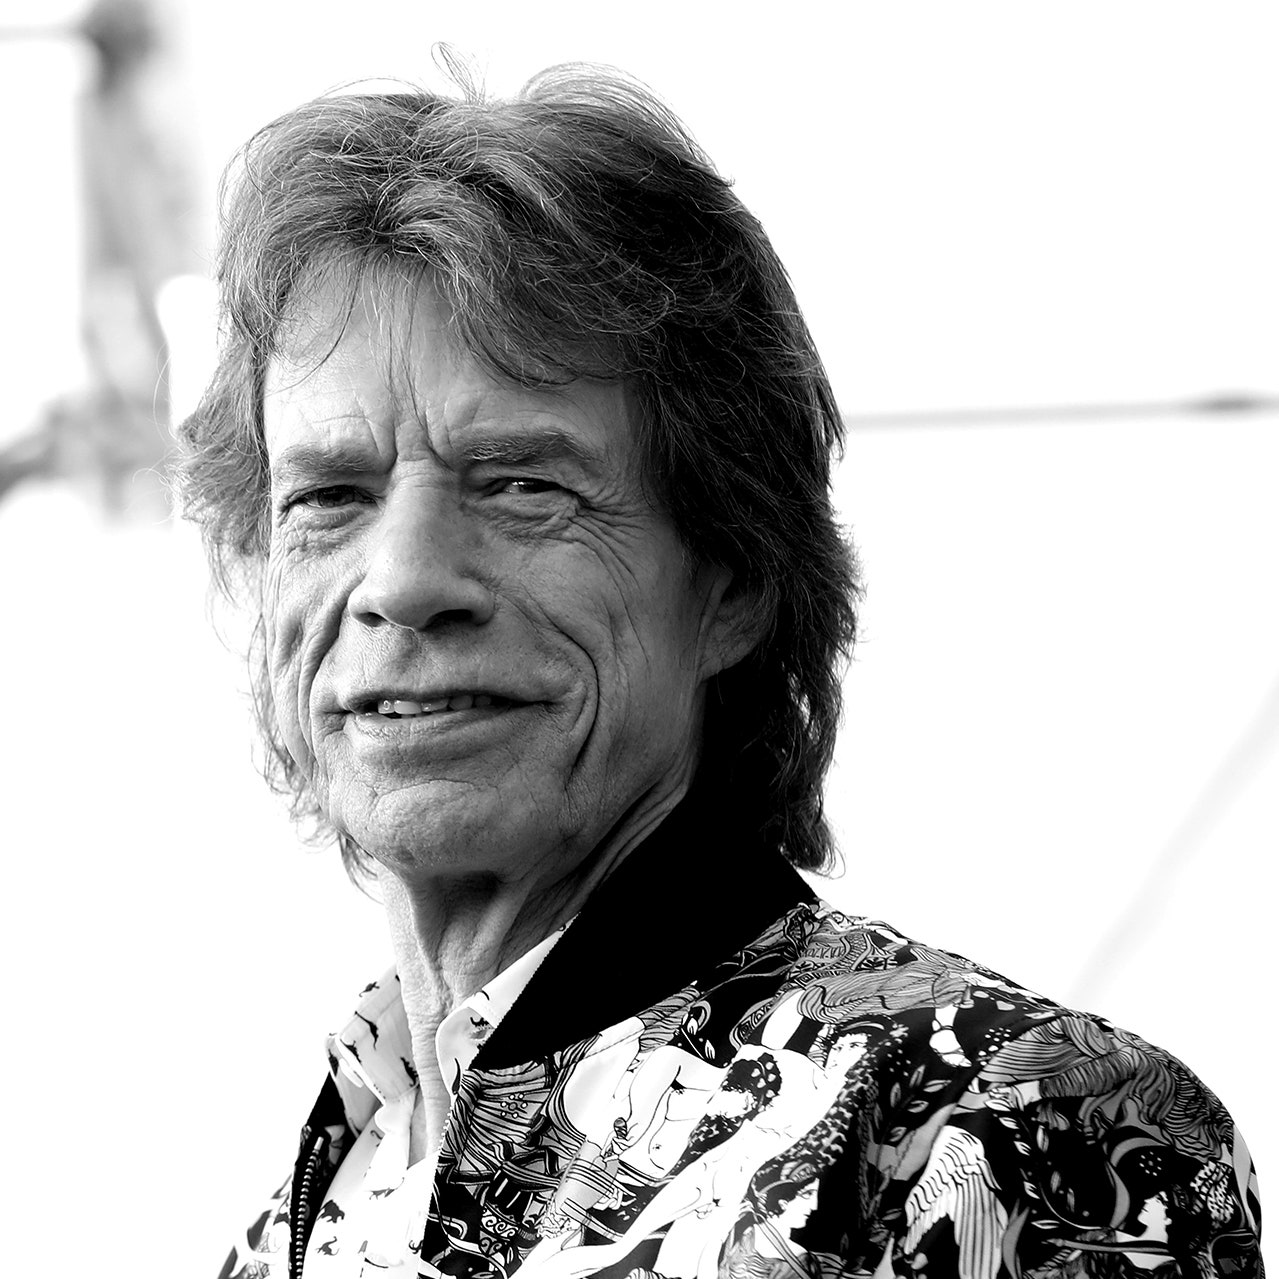 Mick Jagger nmatworth